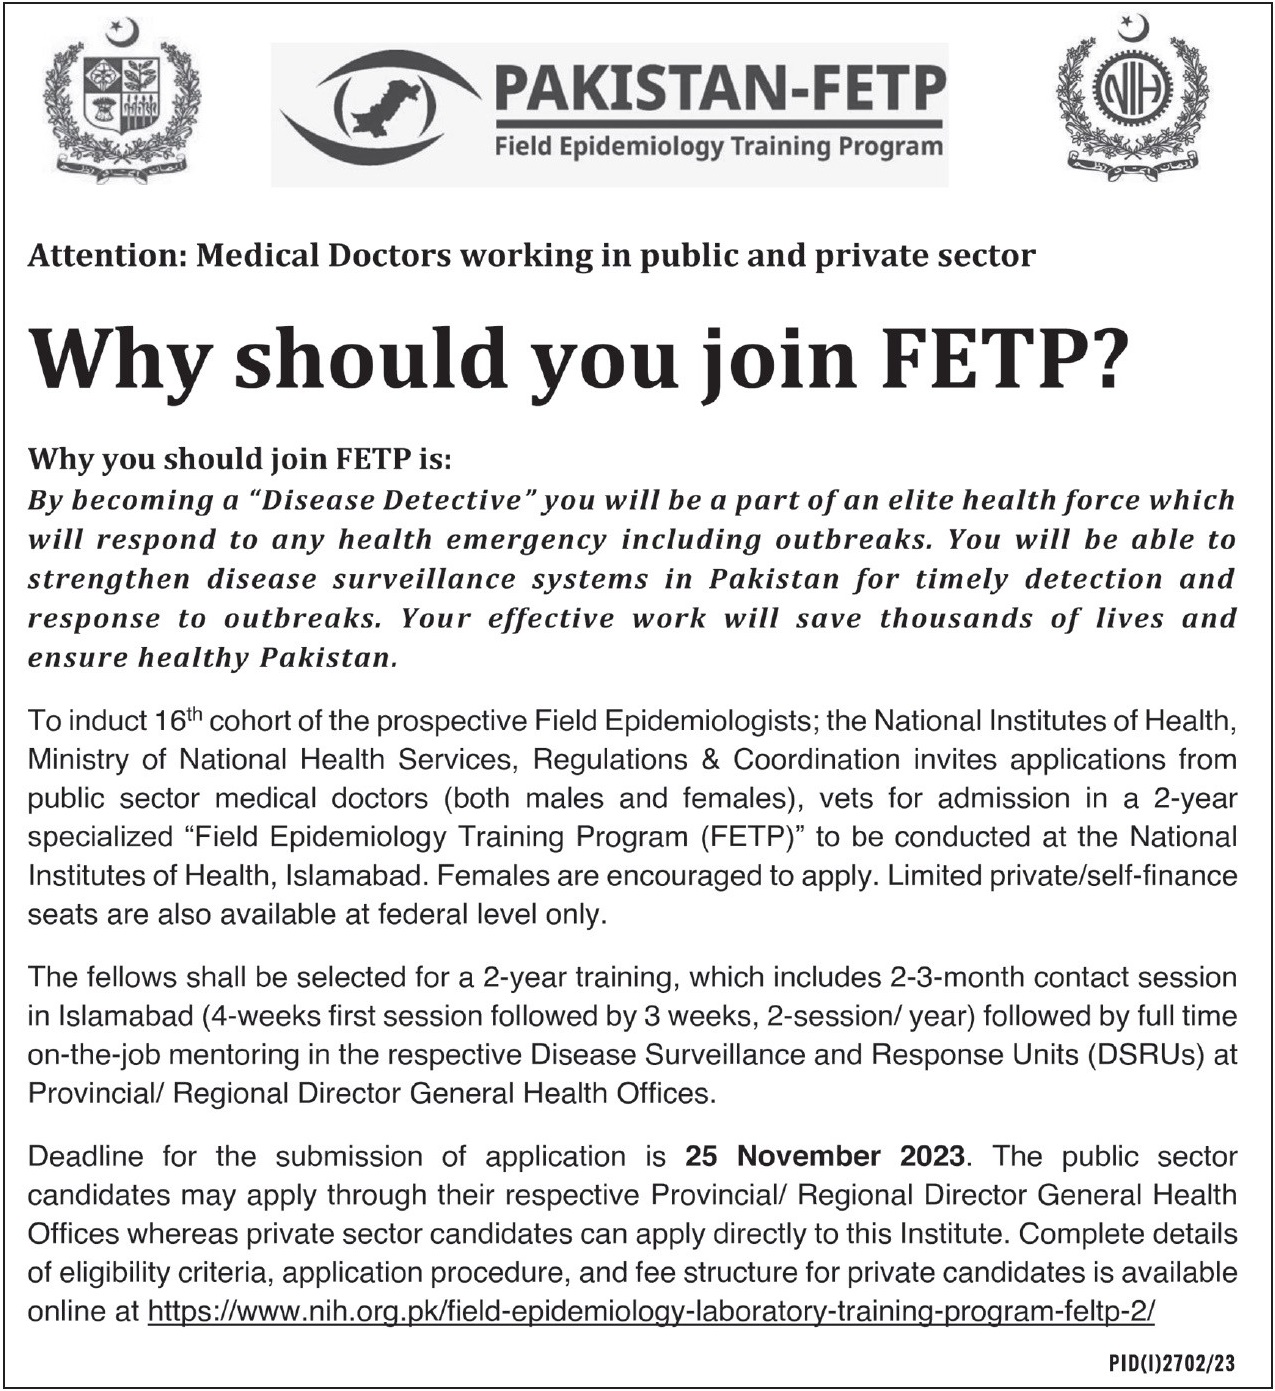 Pakistan FETP Field Epidemiology Training Program